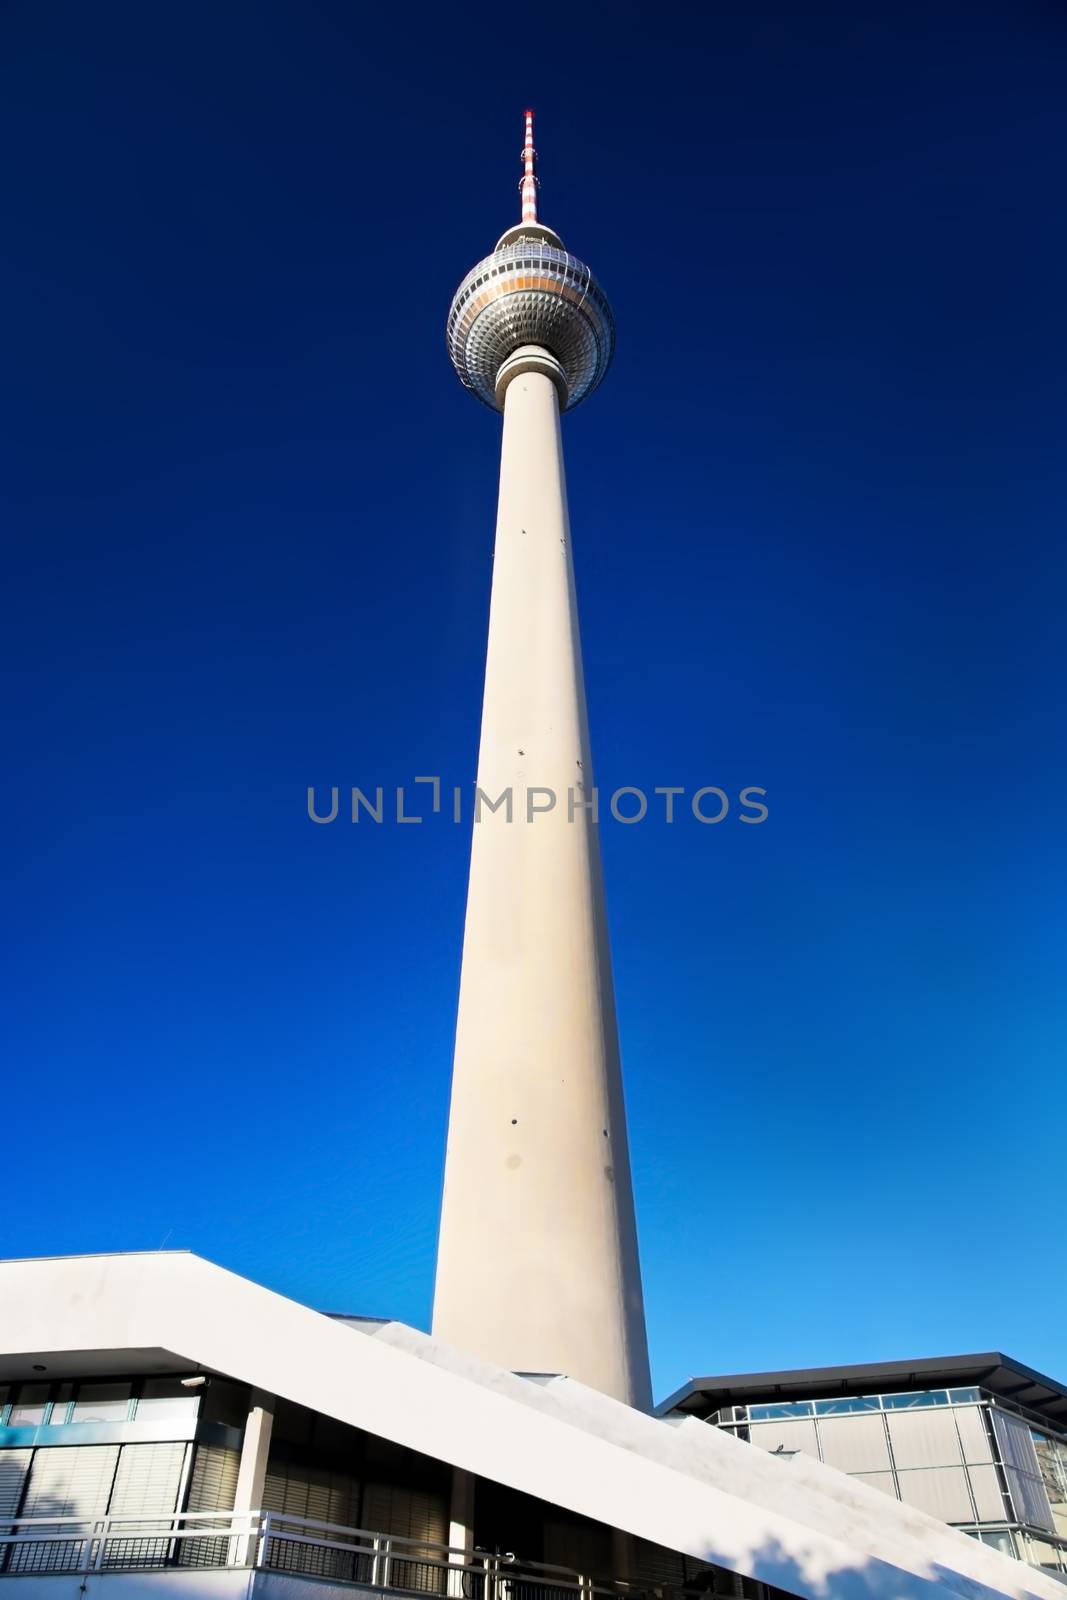 Tv tower or Fersehturm in Berlin, Germany. Sunny blue sky